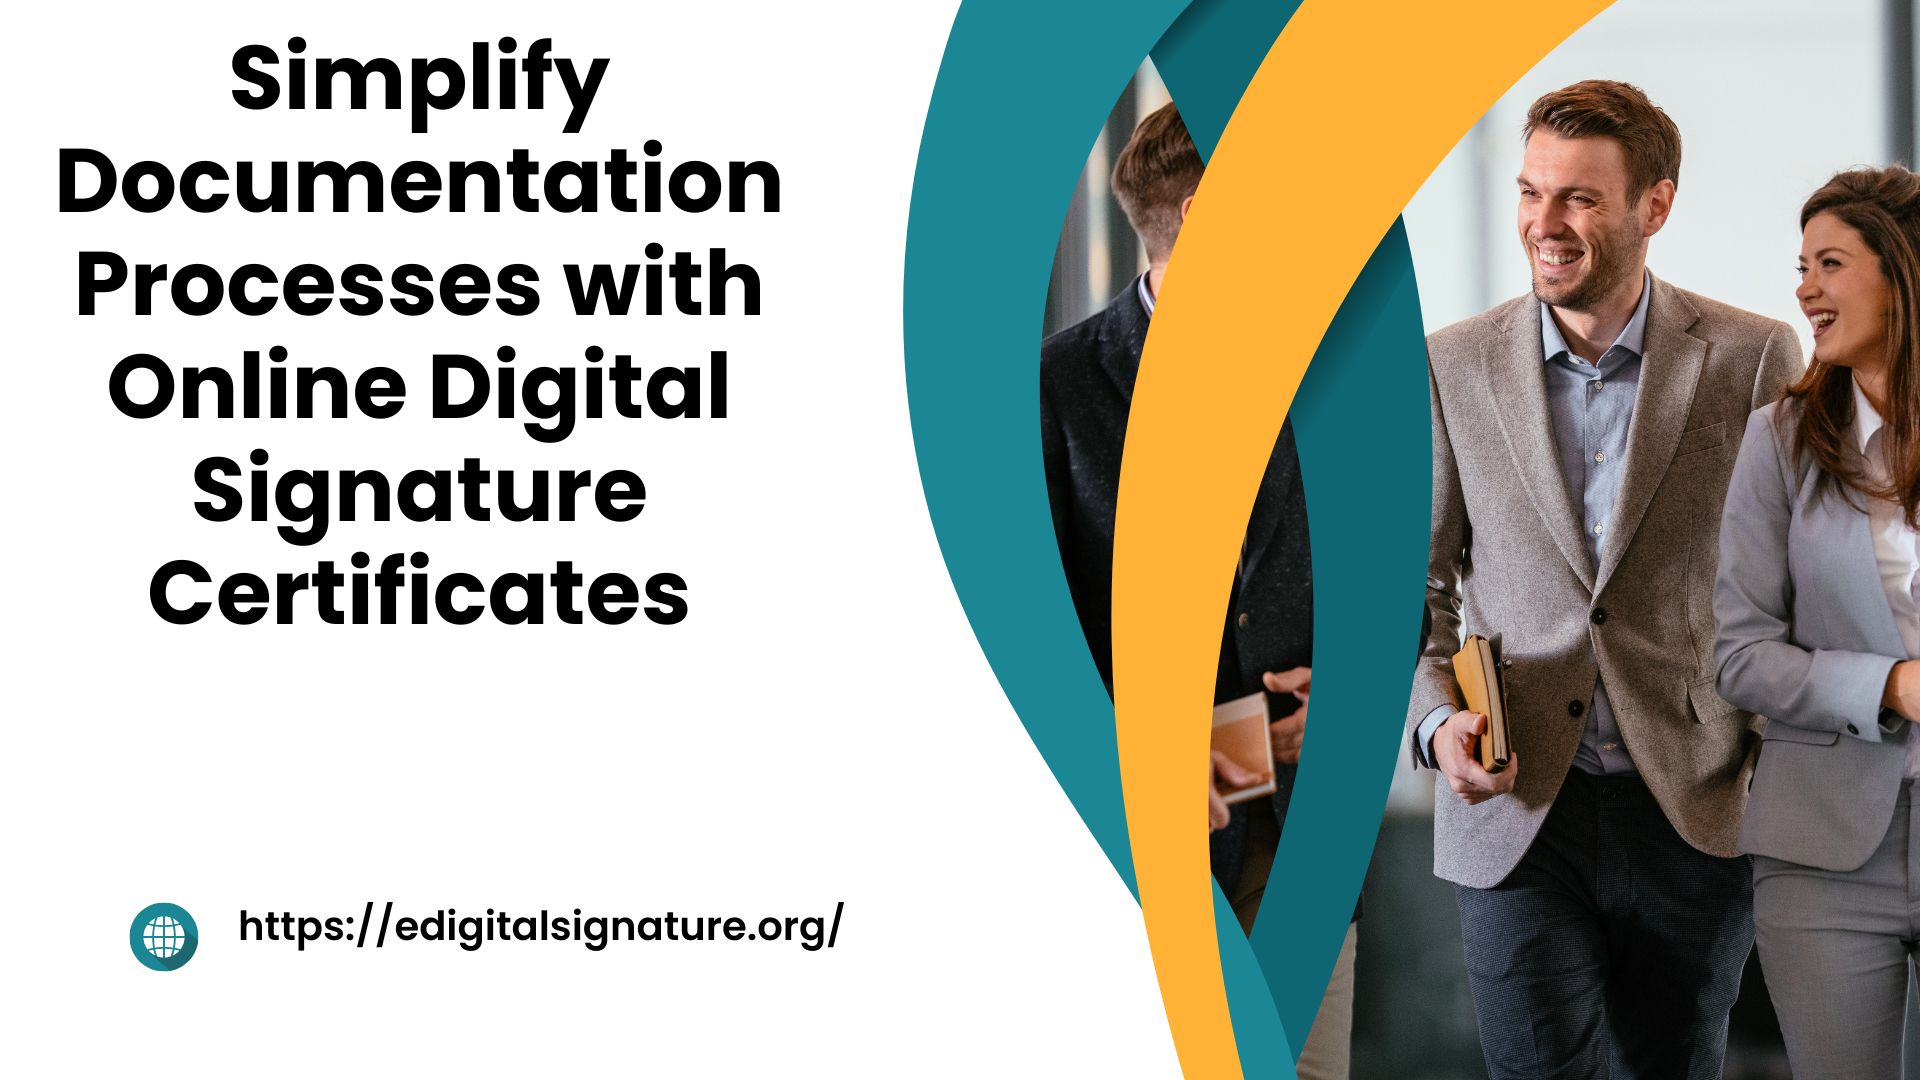 Simplify Documentation Processes with Online Digital Signature Certificates